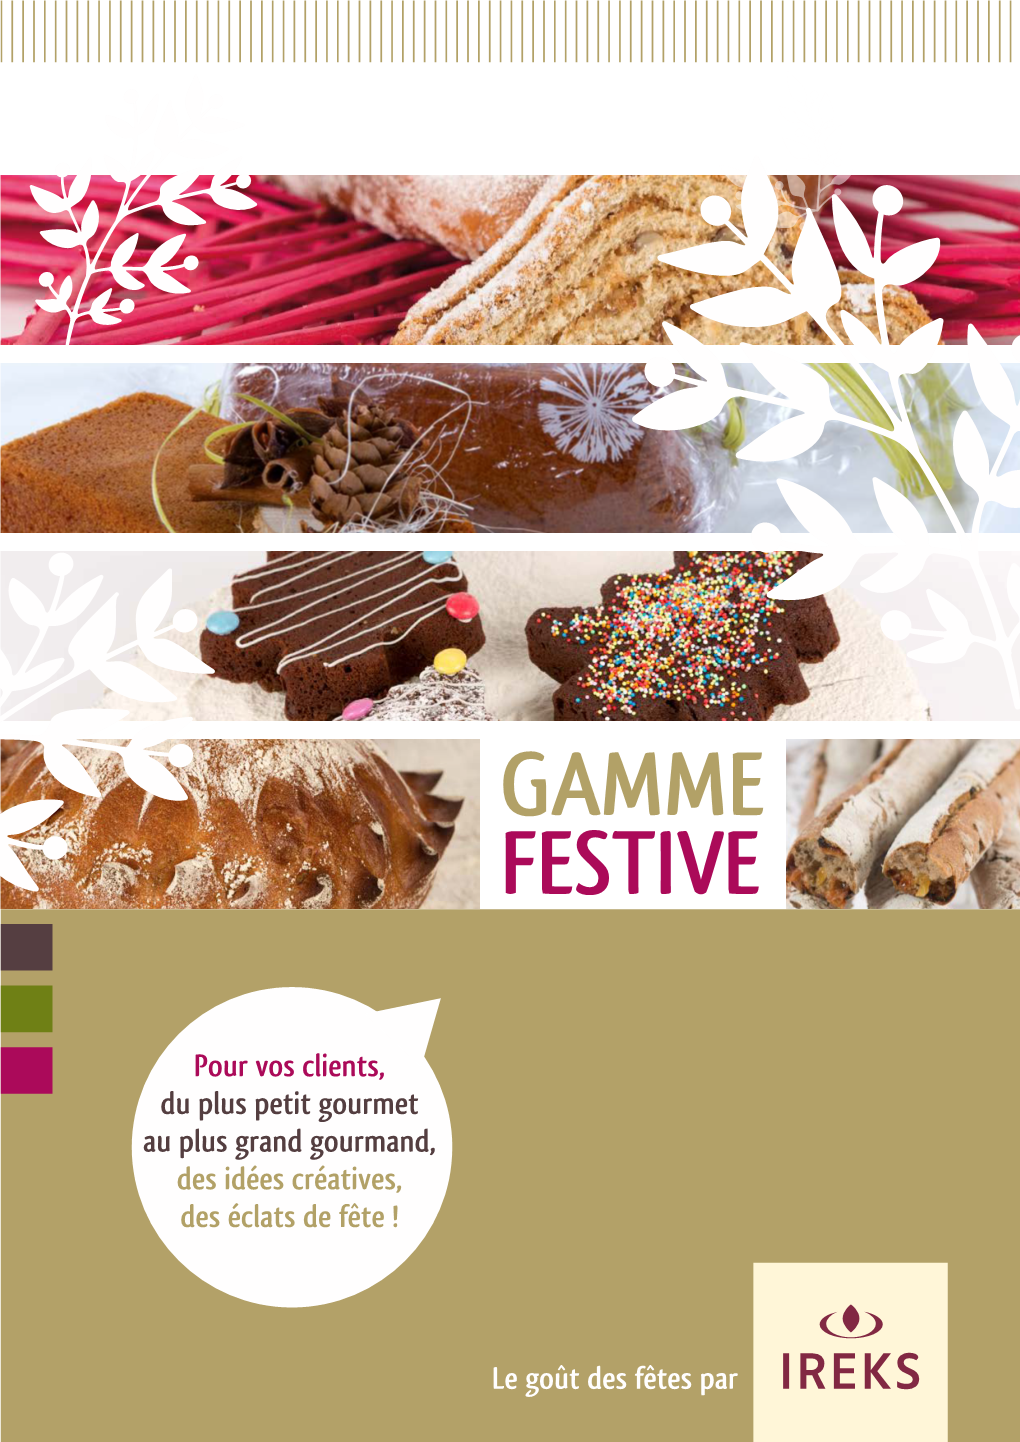 Gammefestive-Brochure-0917 44177.Pdf